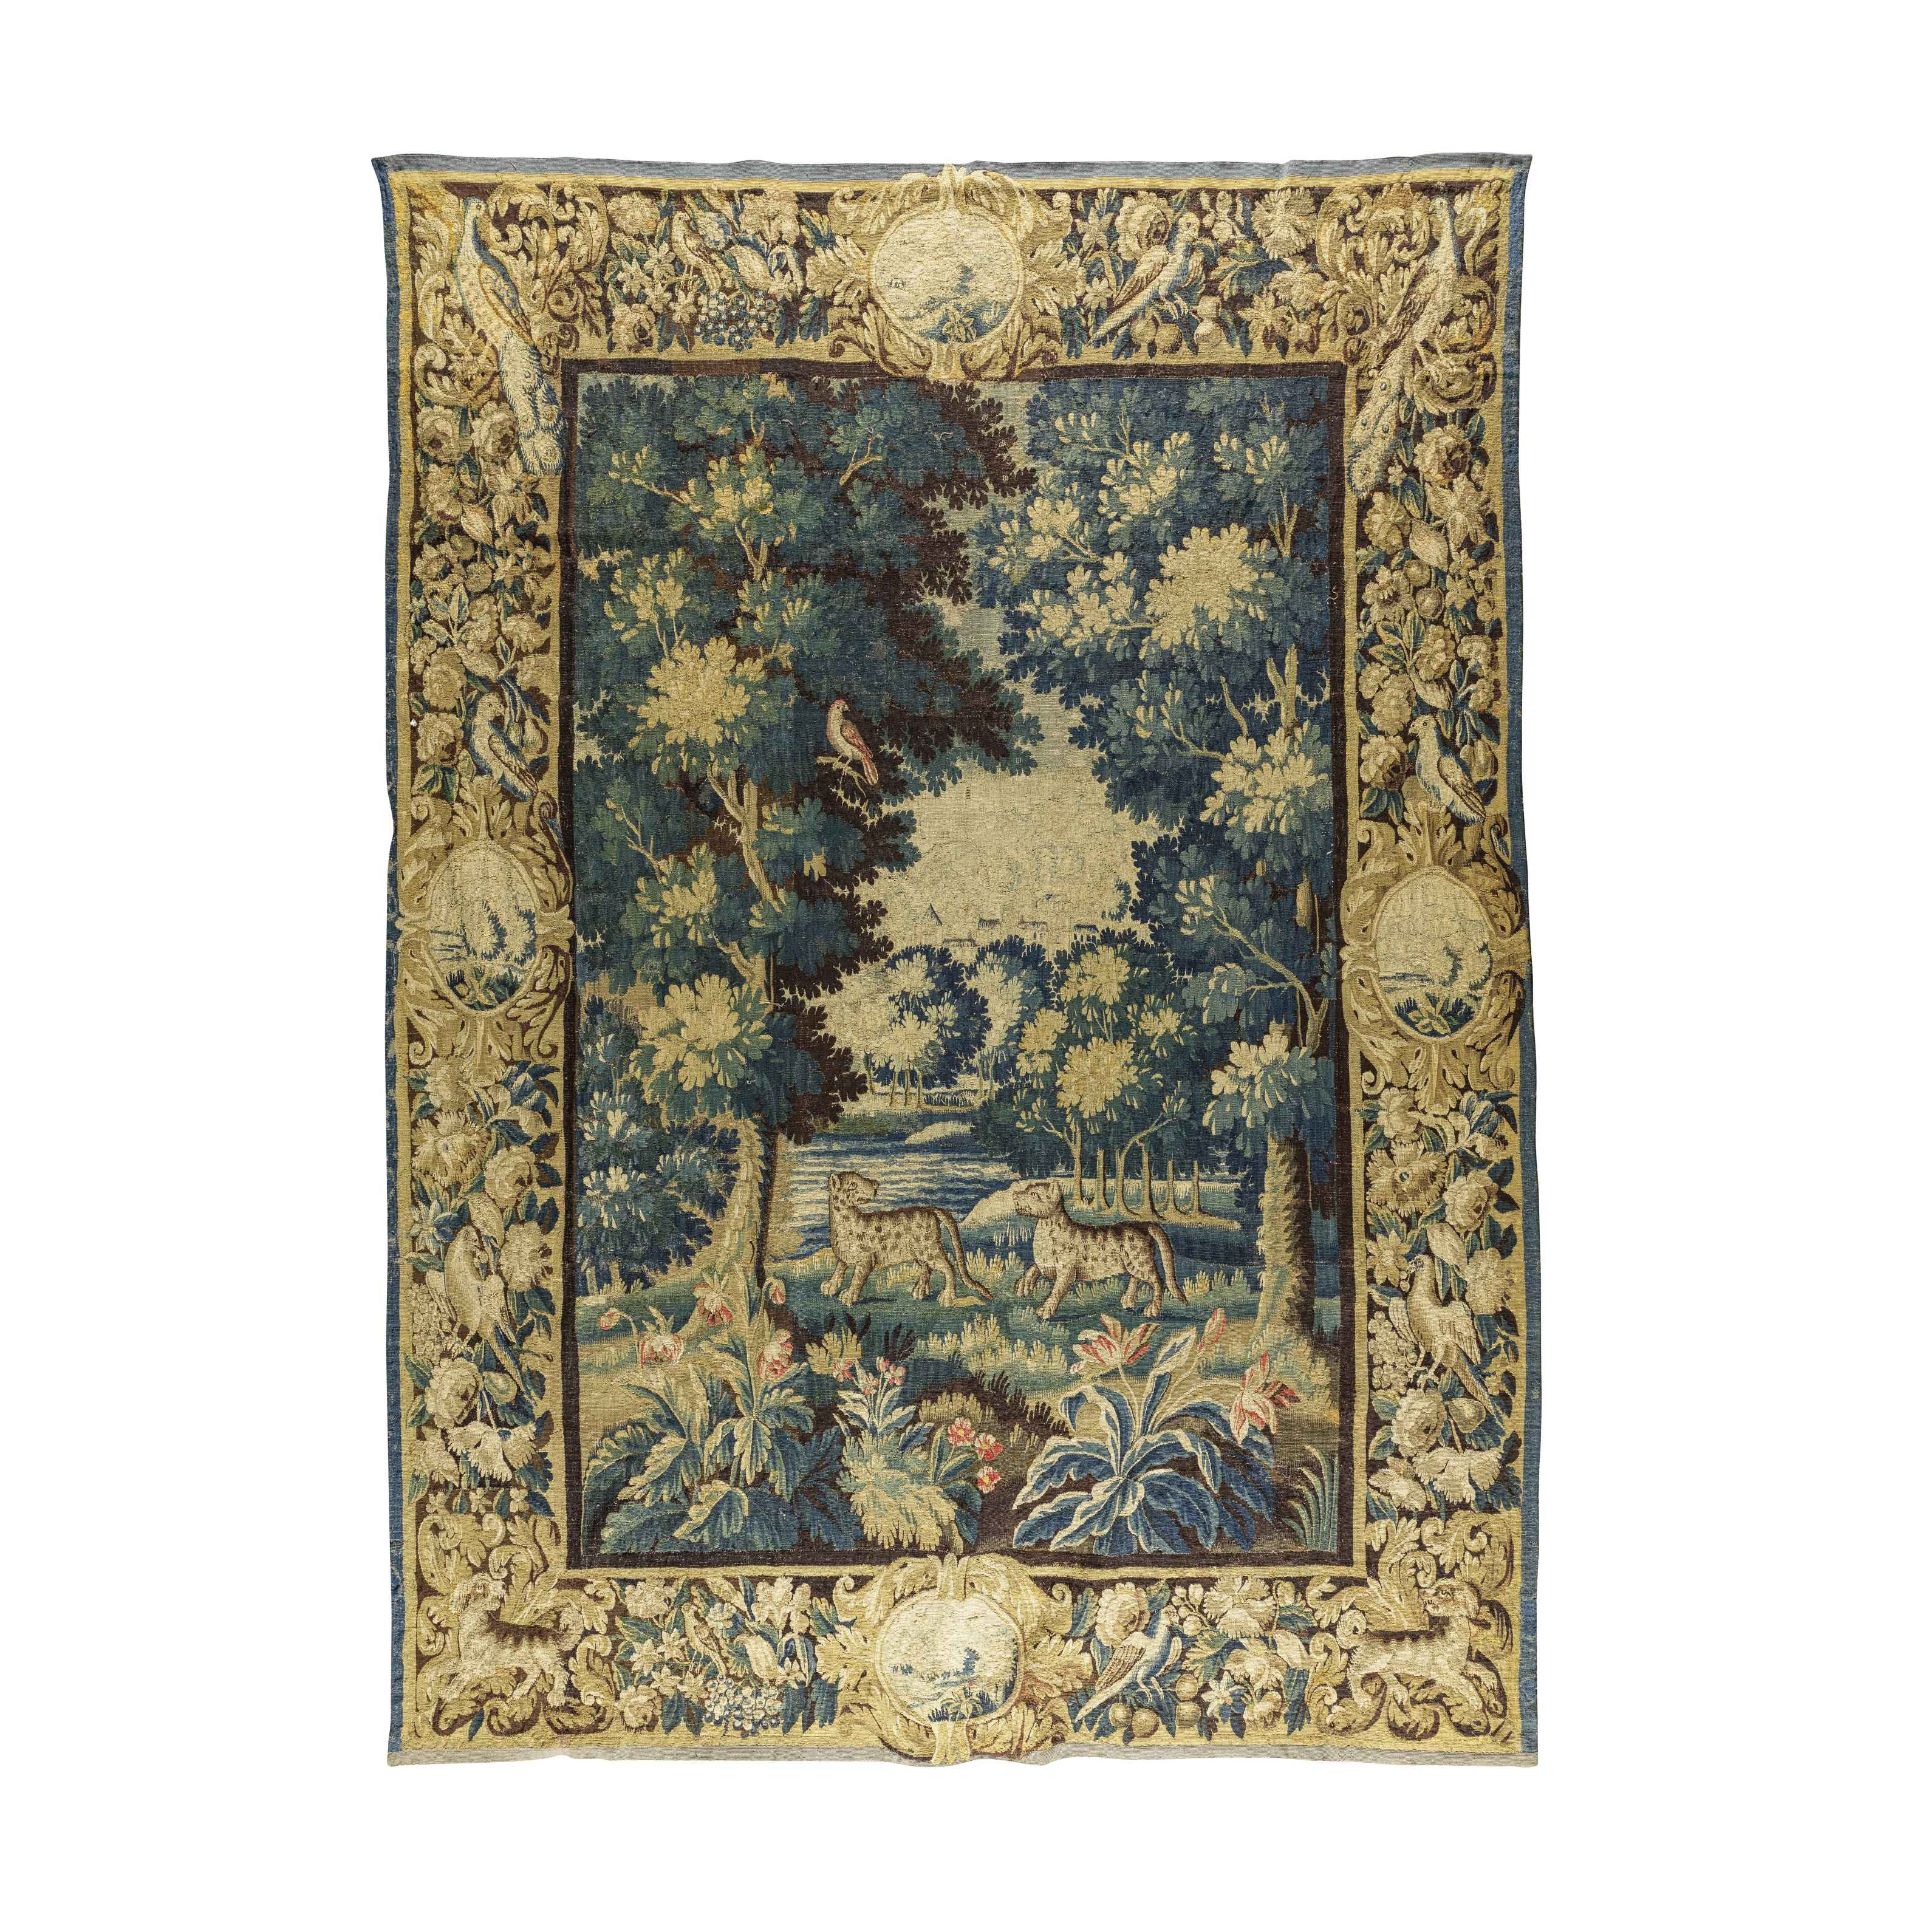 Tapisserie dite Verdure, Aubusson XVIIIe si&#232;cleA French Aubuson verdure tapestry, 18th century